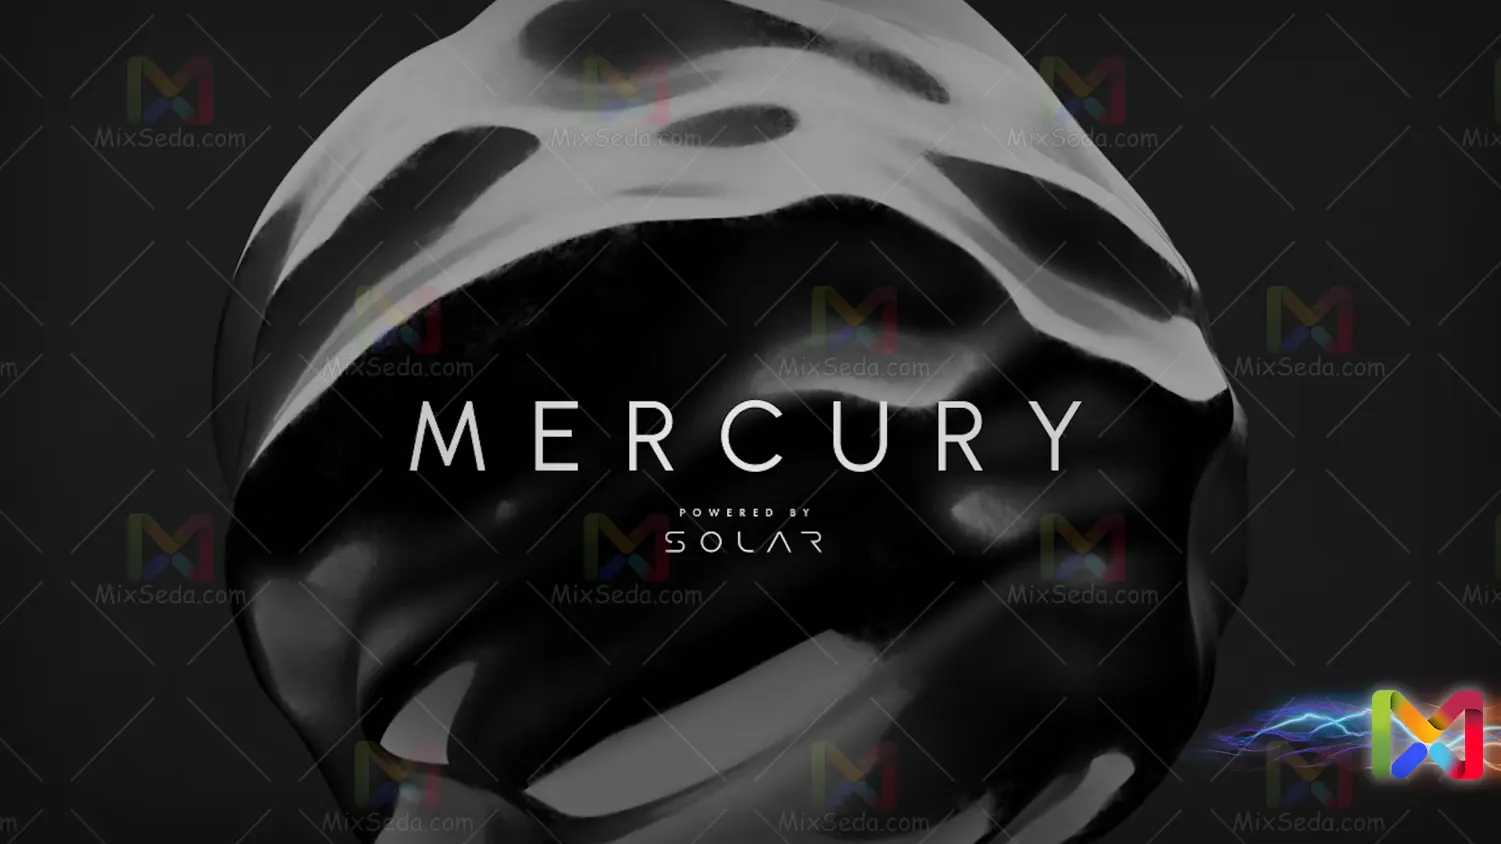 Spitfire Audio release Mercury